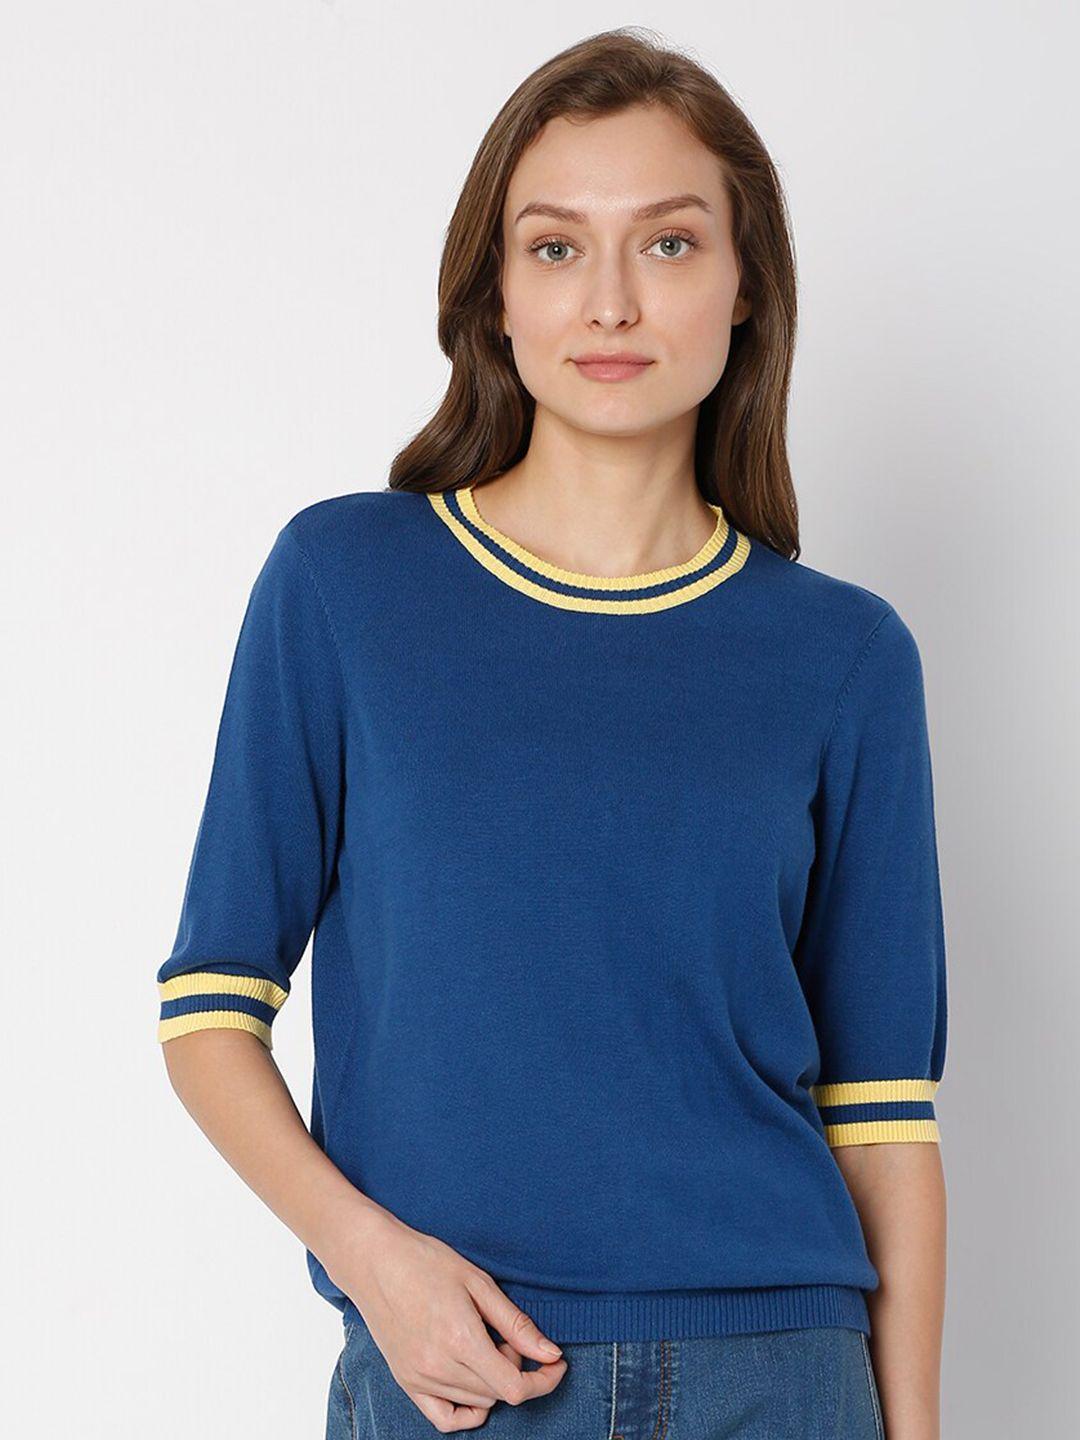 vero moda women blue & yellow pullover